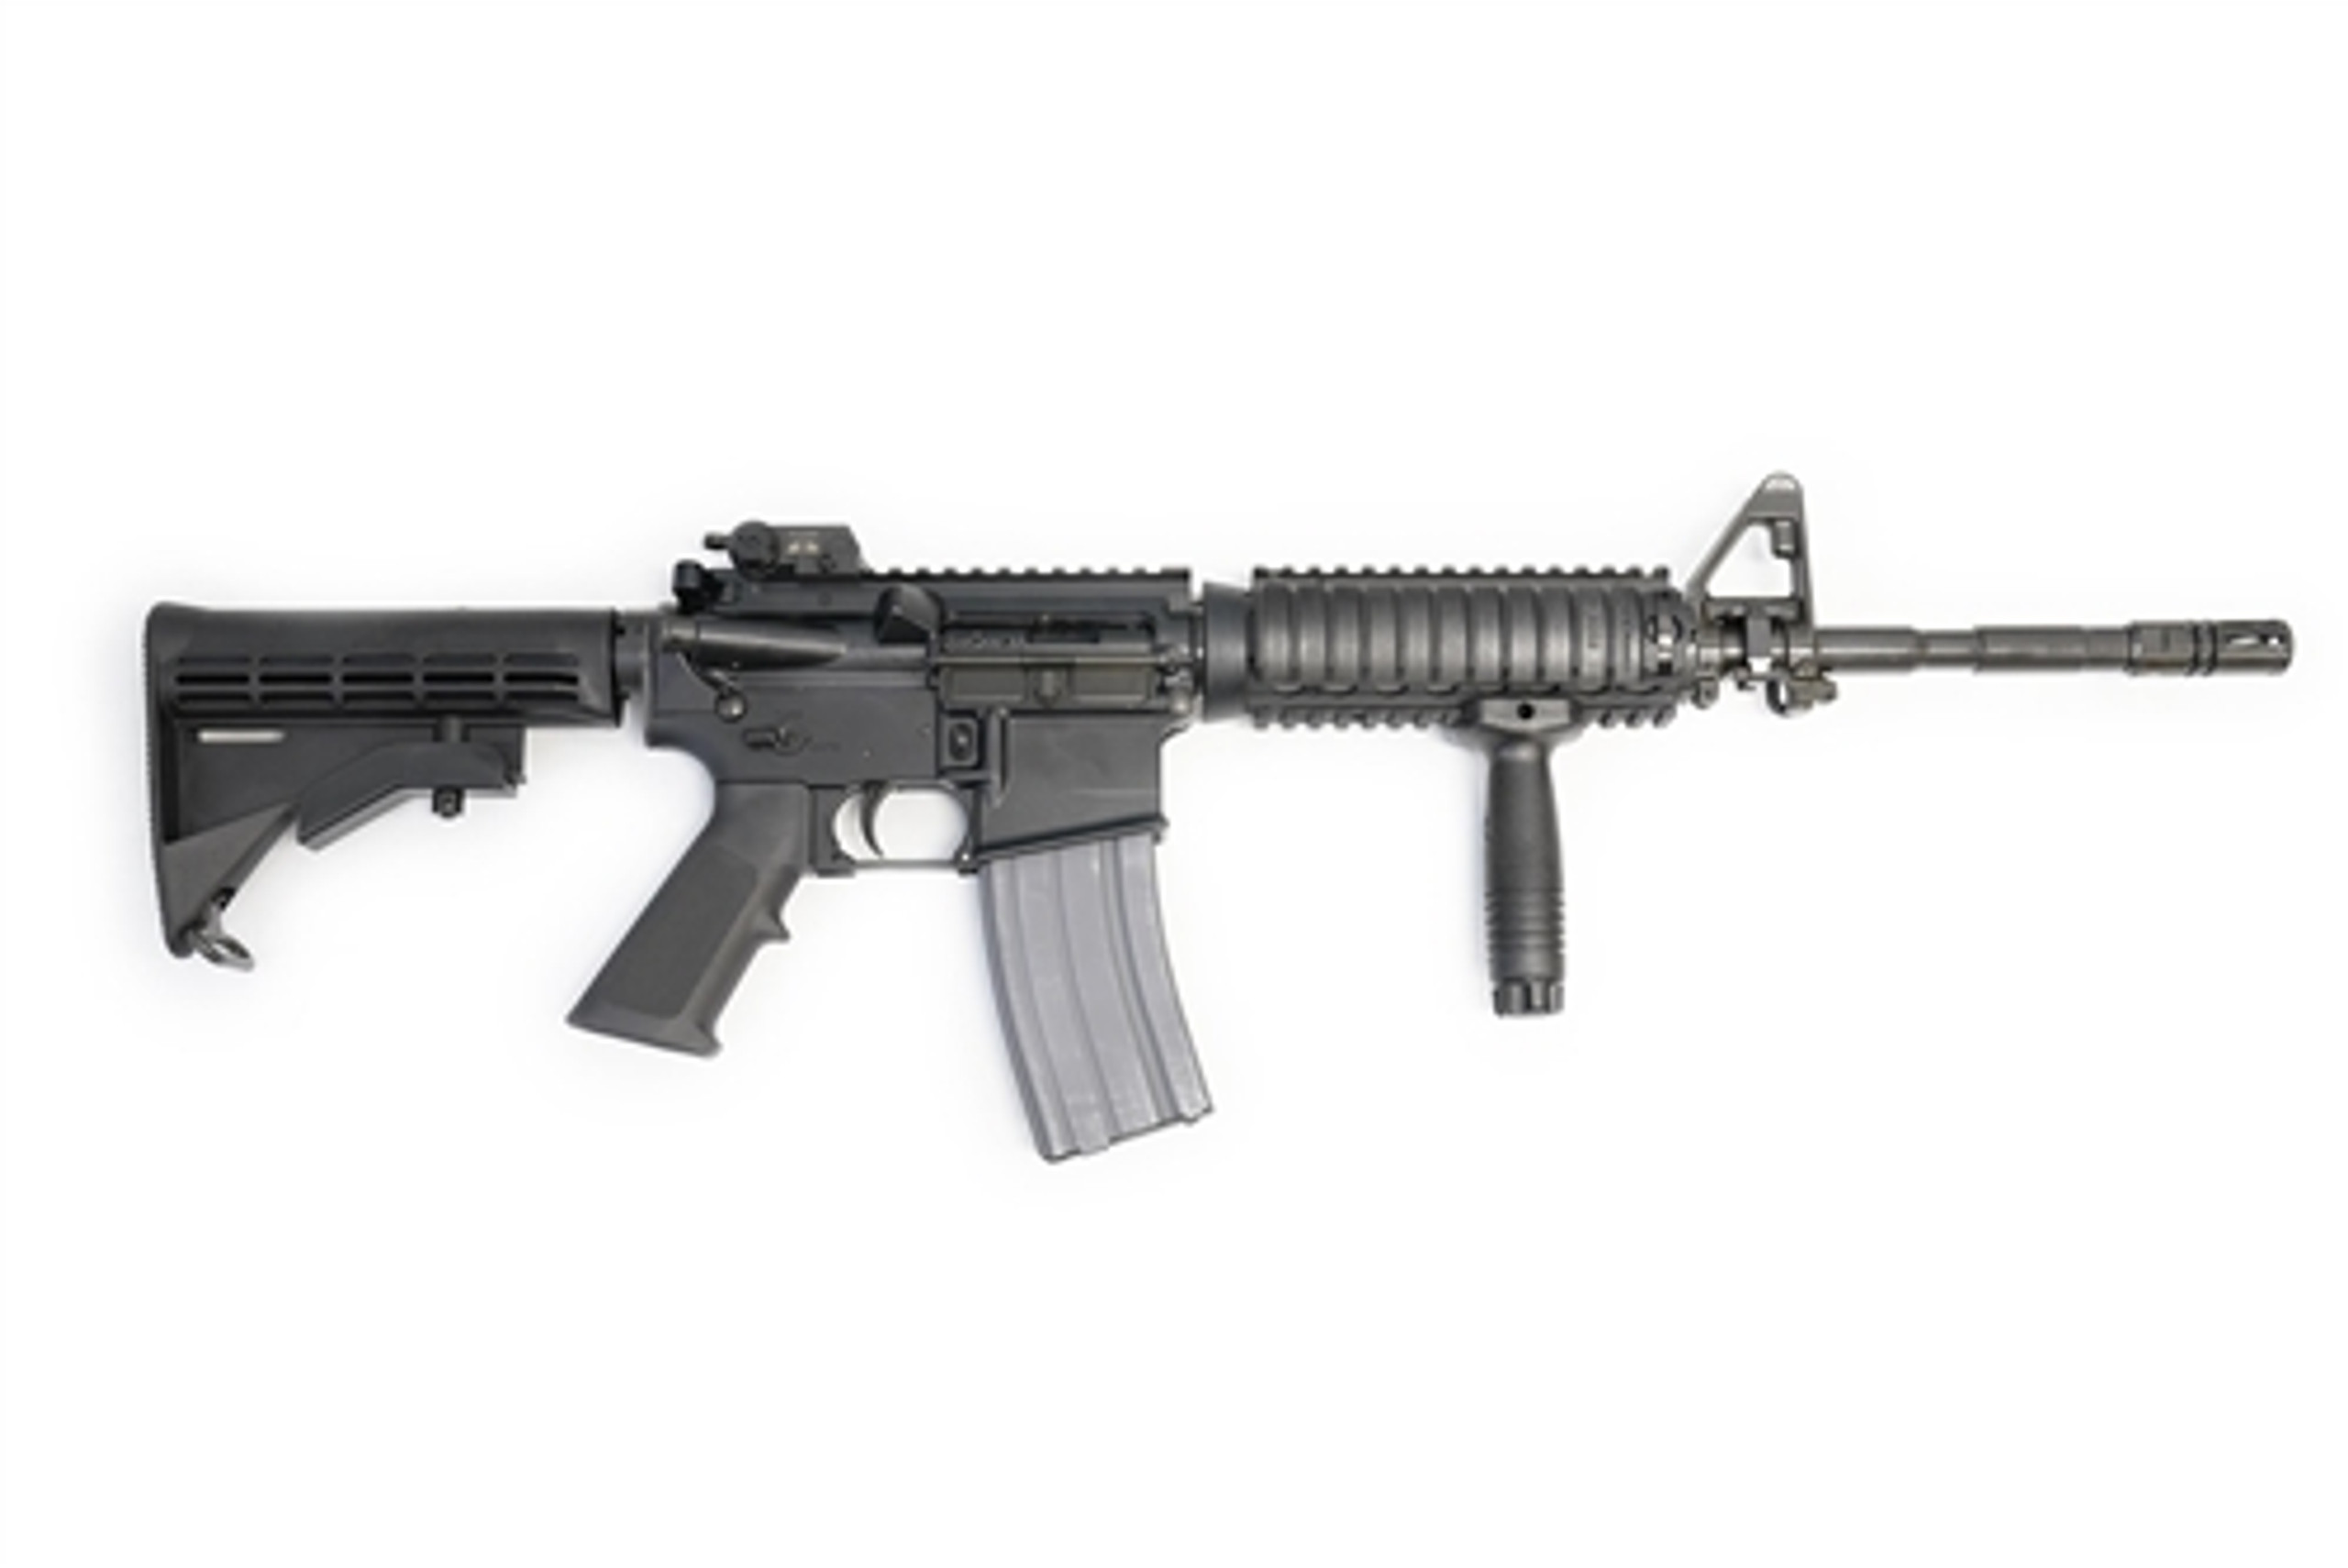 Colt M4a1 Socom Carbine 556mm Semi Auto Rifle Us Govt Property Marked